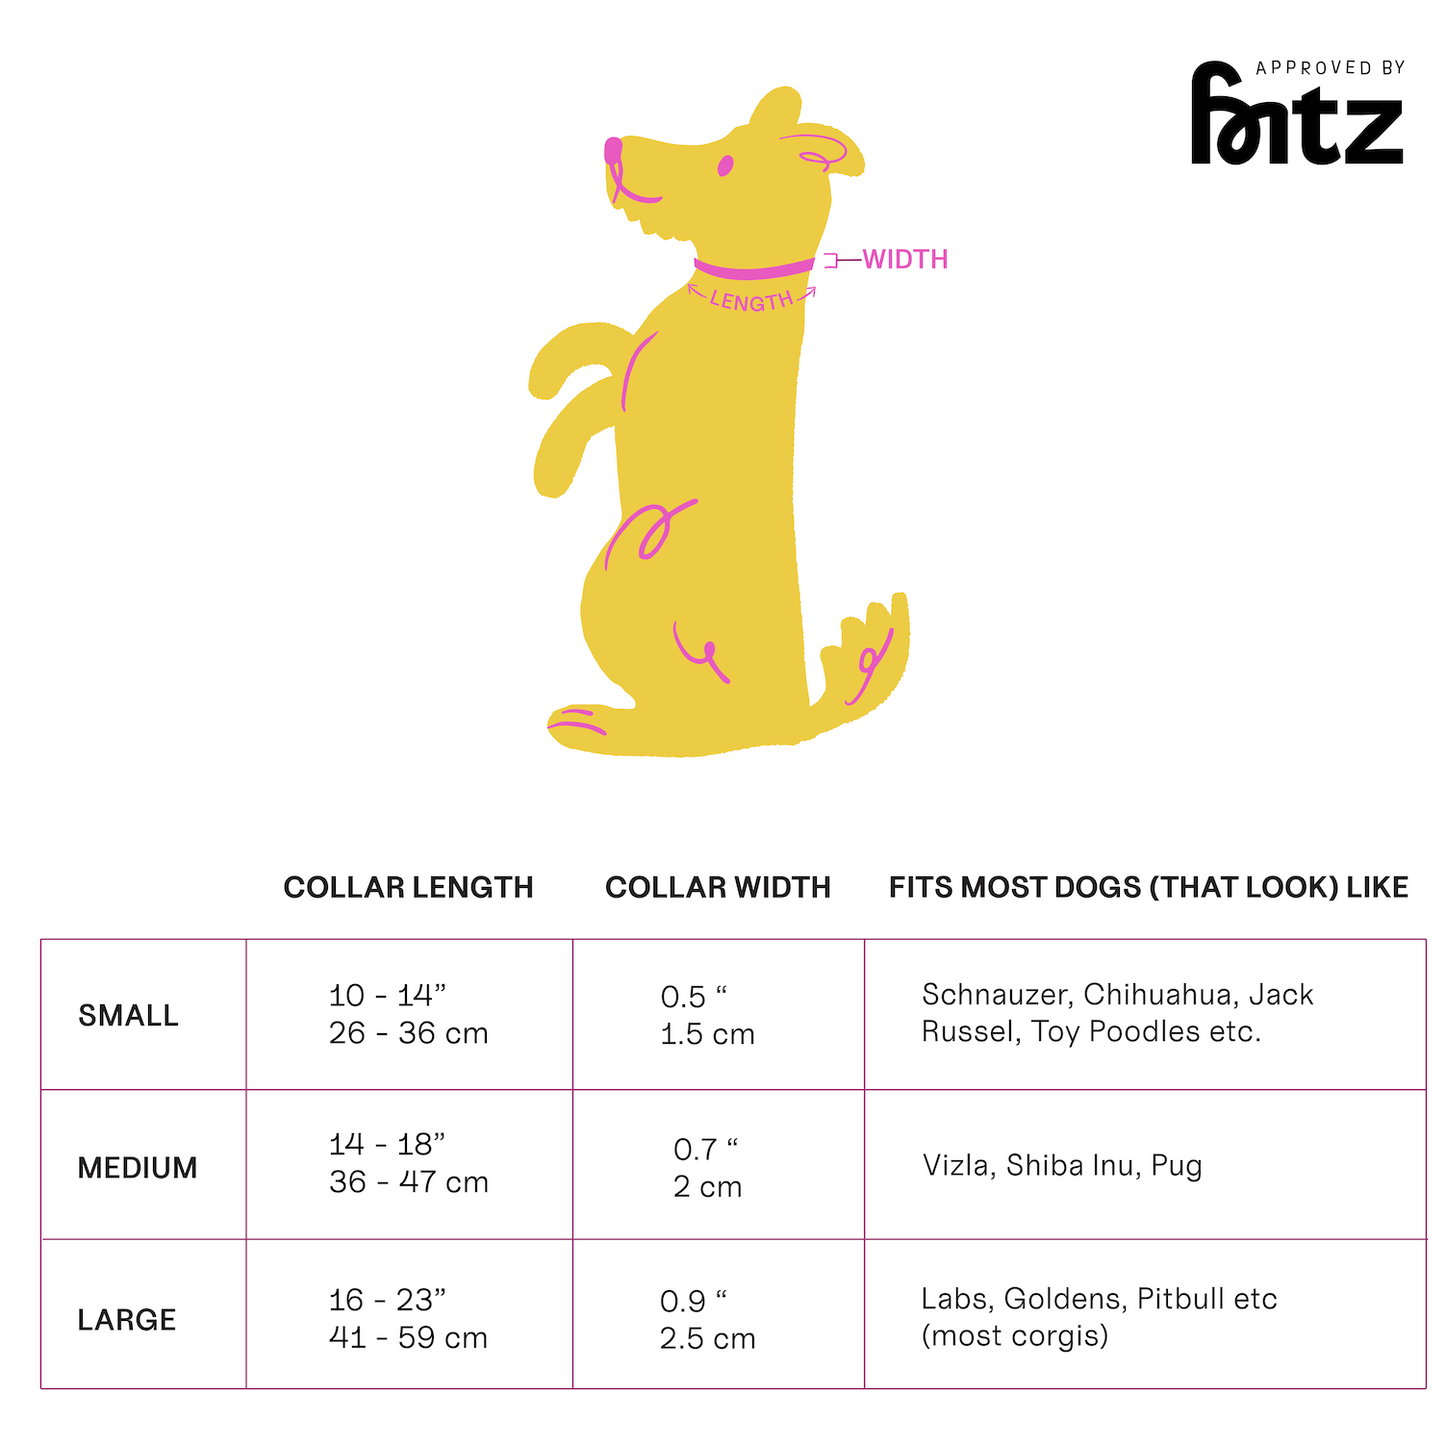 The Fritz Collar